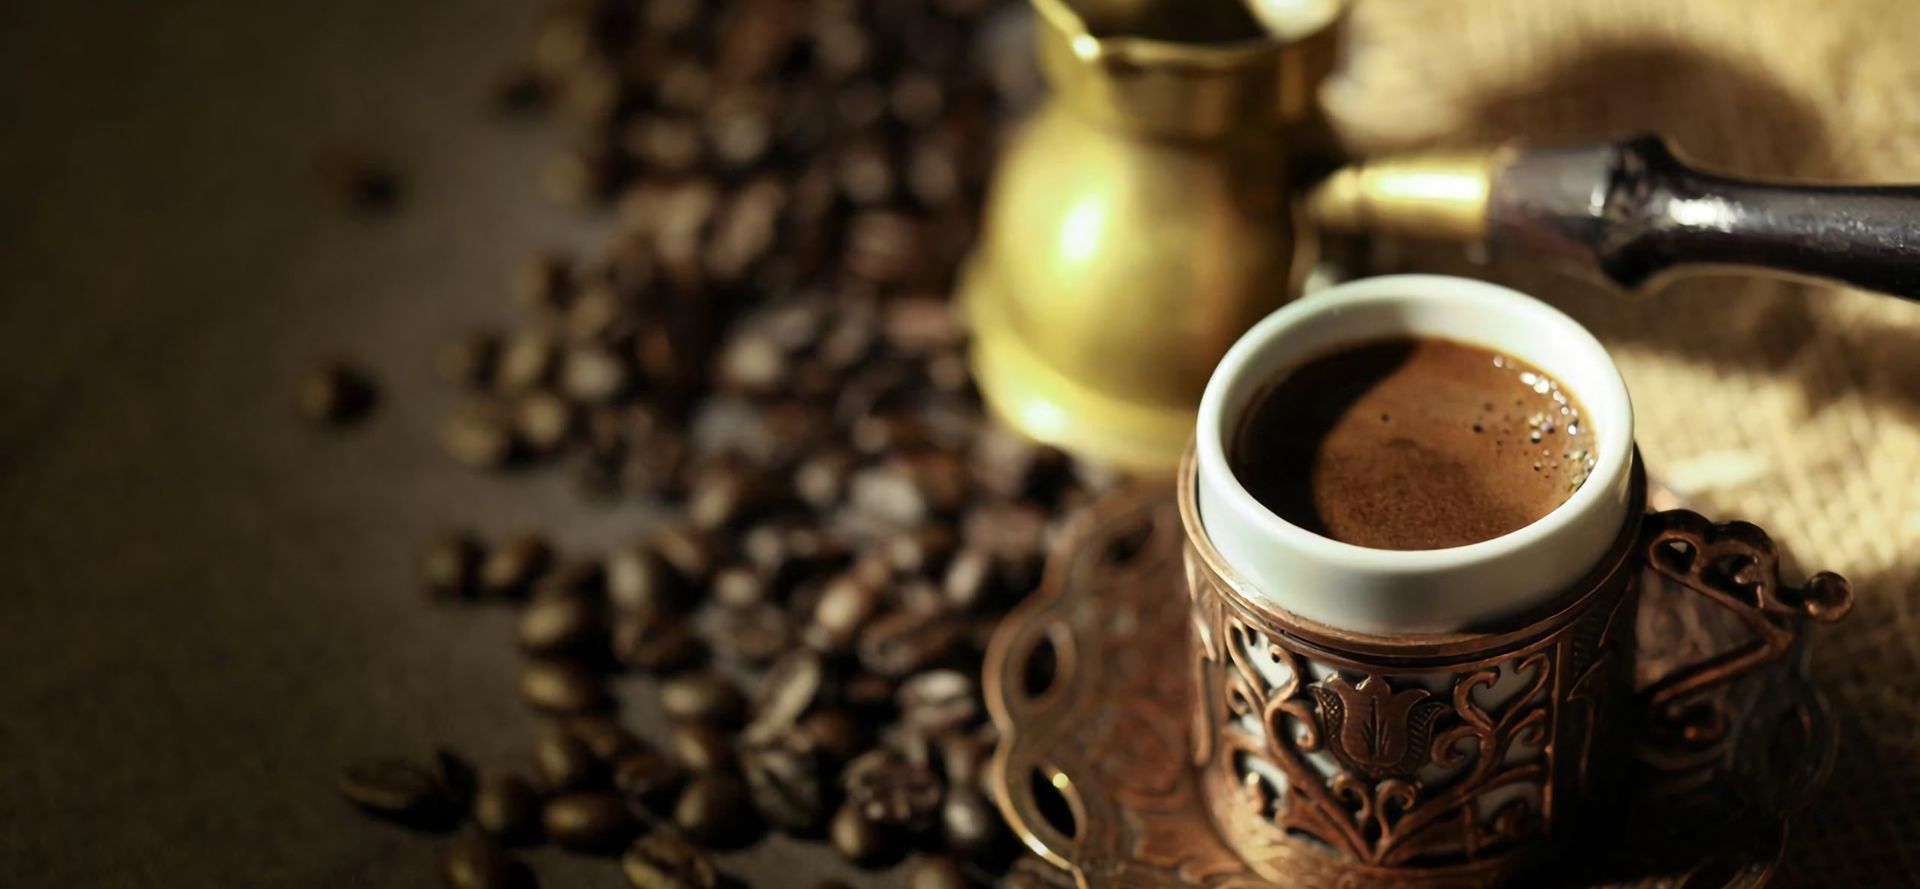 Turkish Coffee In Demitasse-Size Cup.